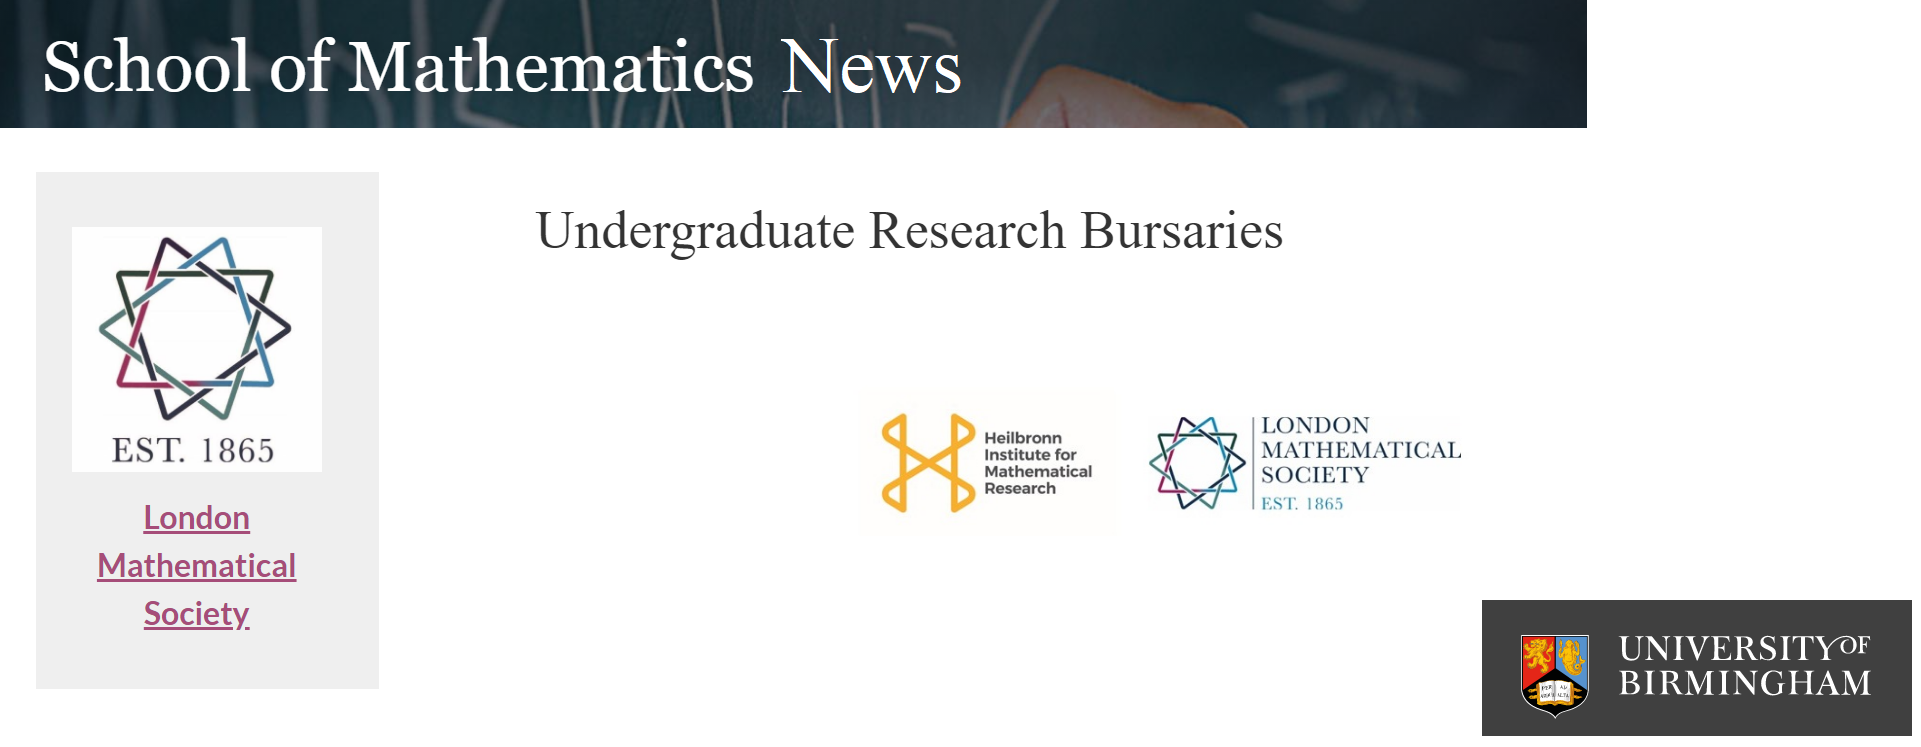 Undergraduate Research Bursaries, with logos of London Mathematical Society and University of Birmingham